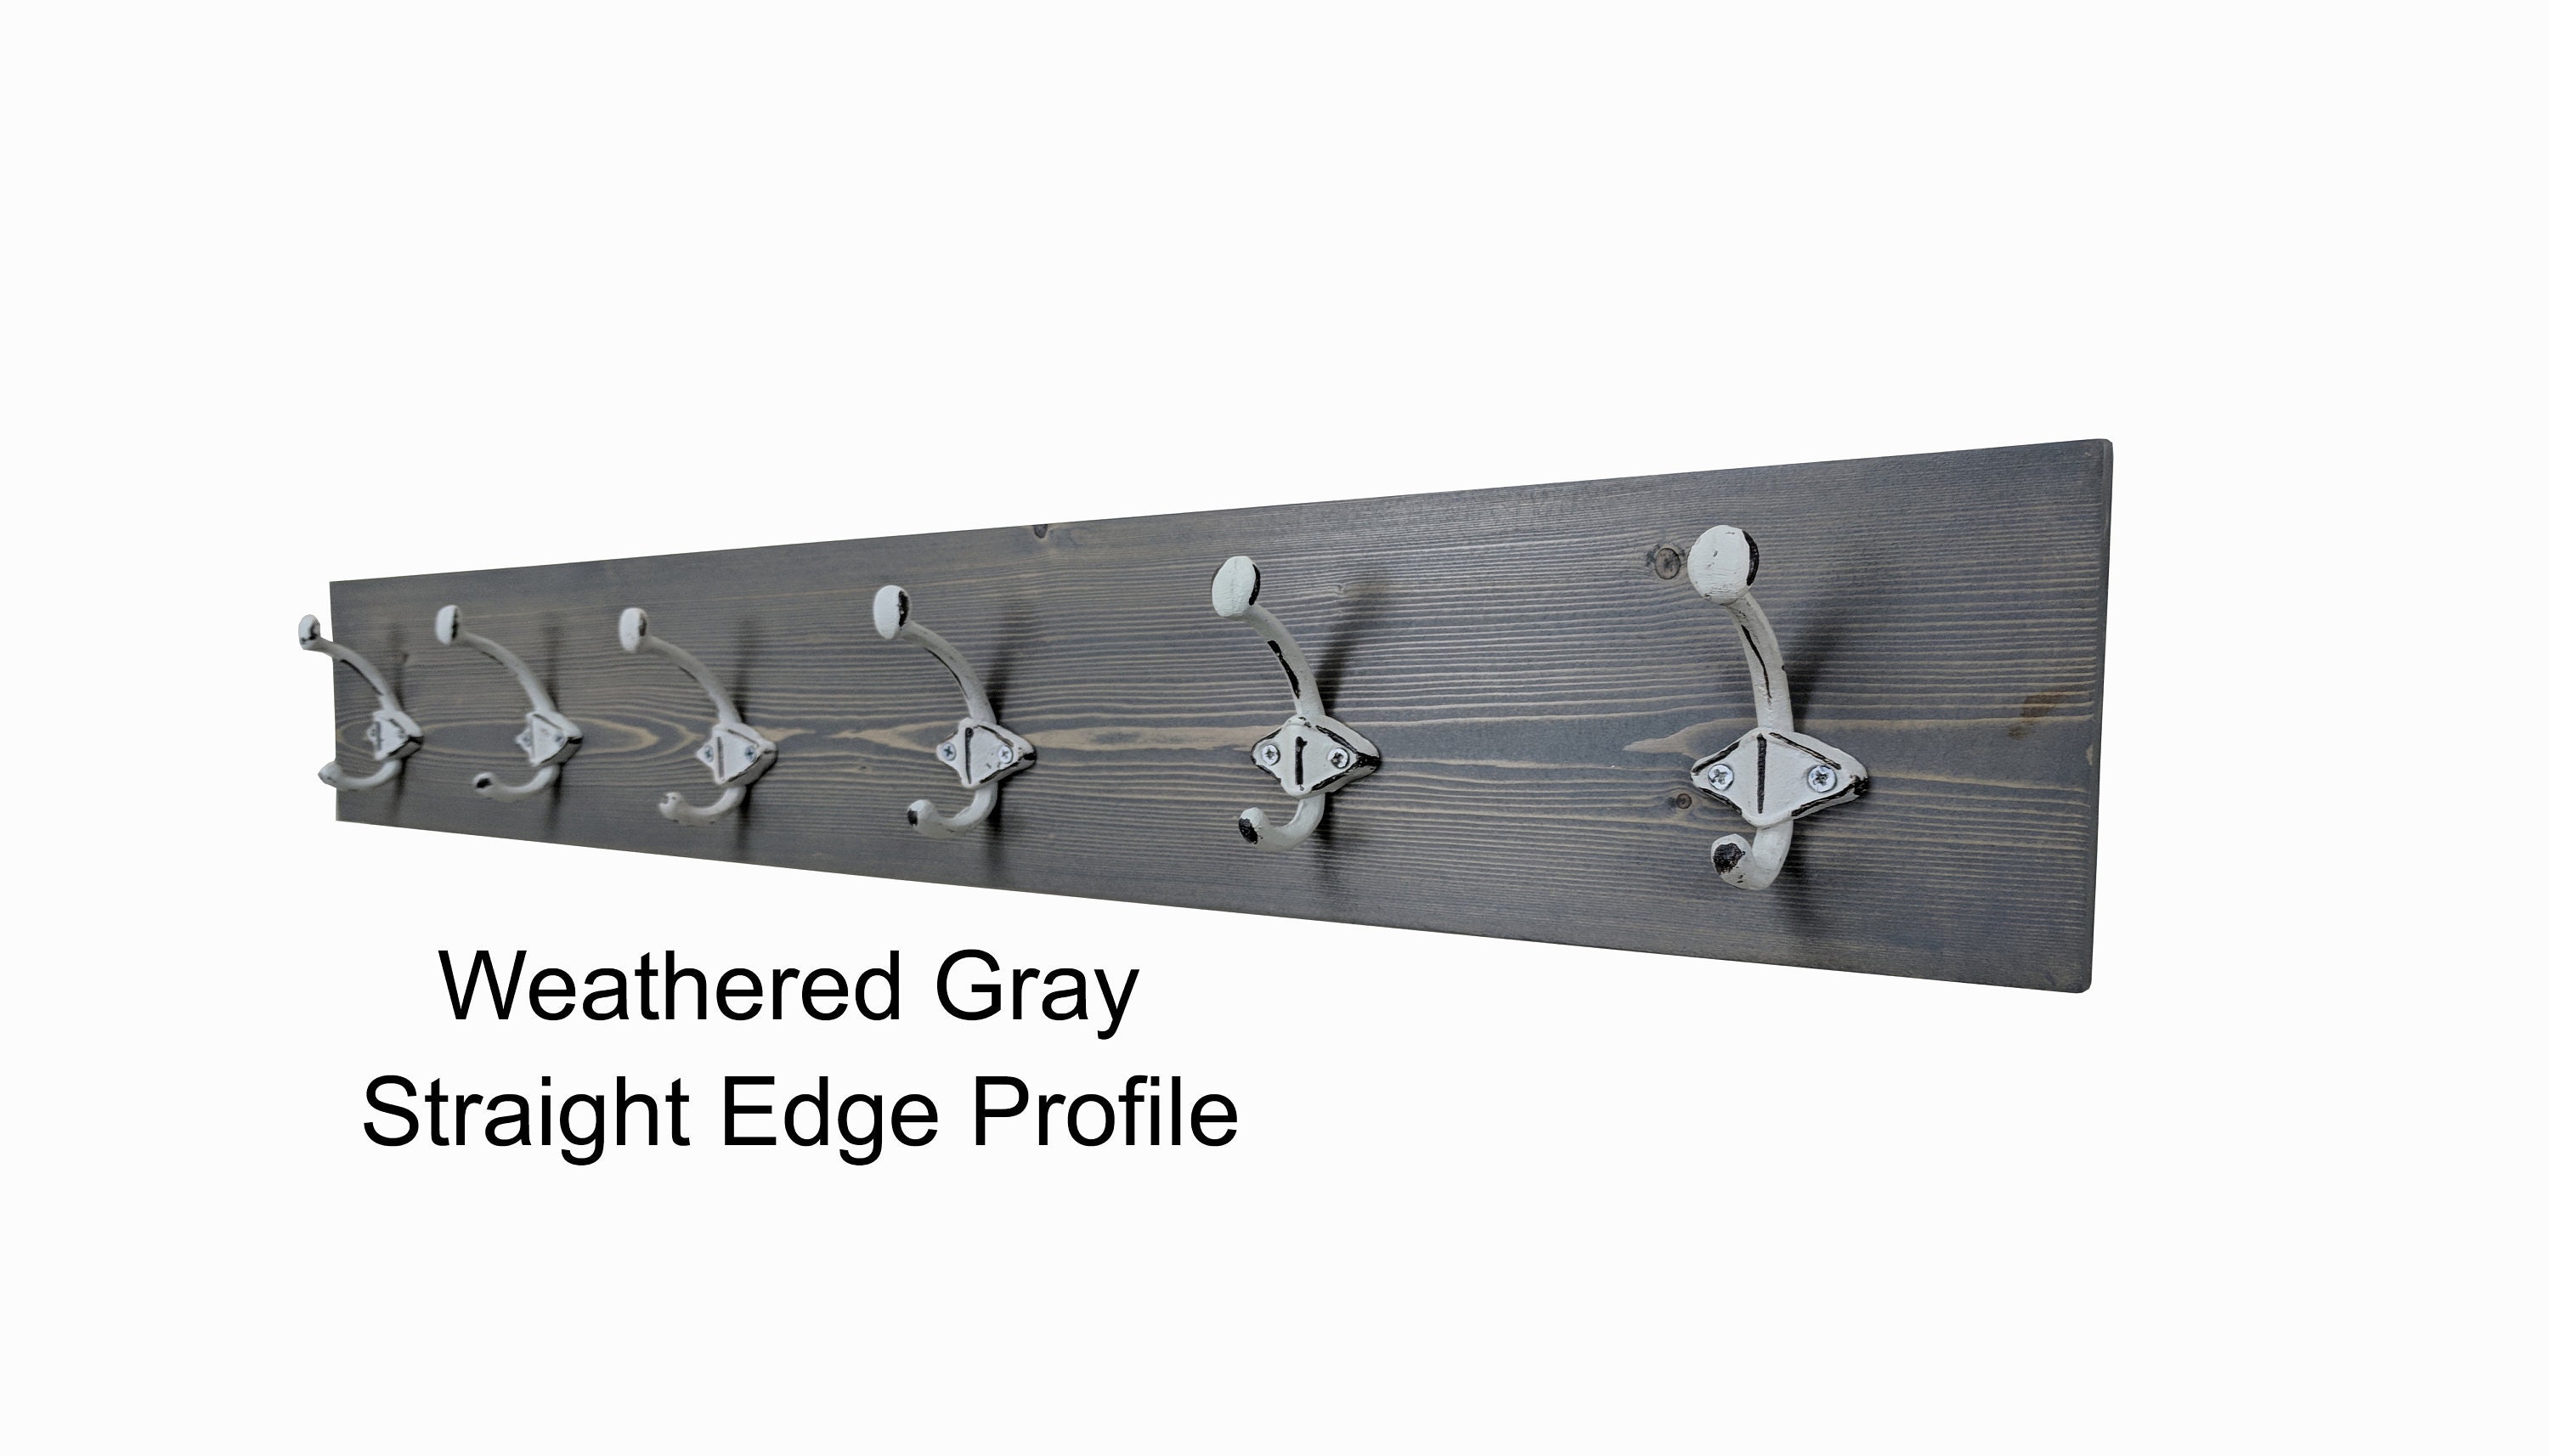 Perched Birds Design Solid Cast Iron Coat Hooks Rack 16" Long 0170-01518 